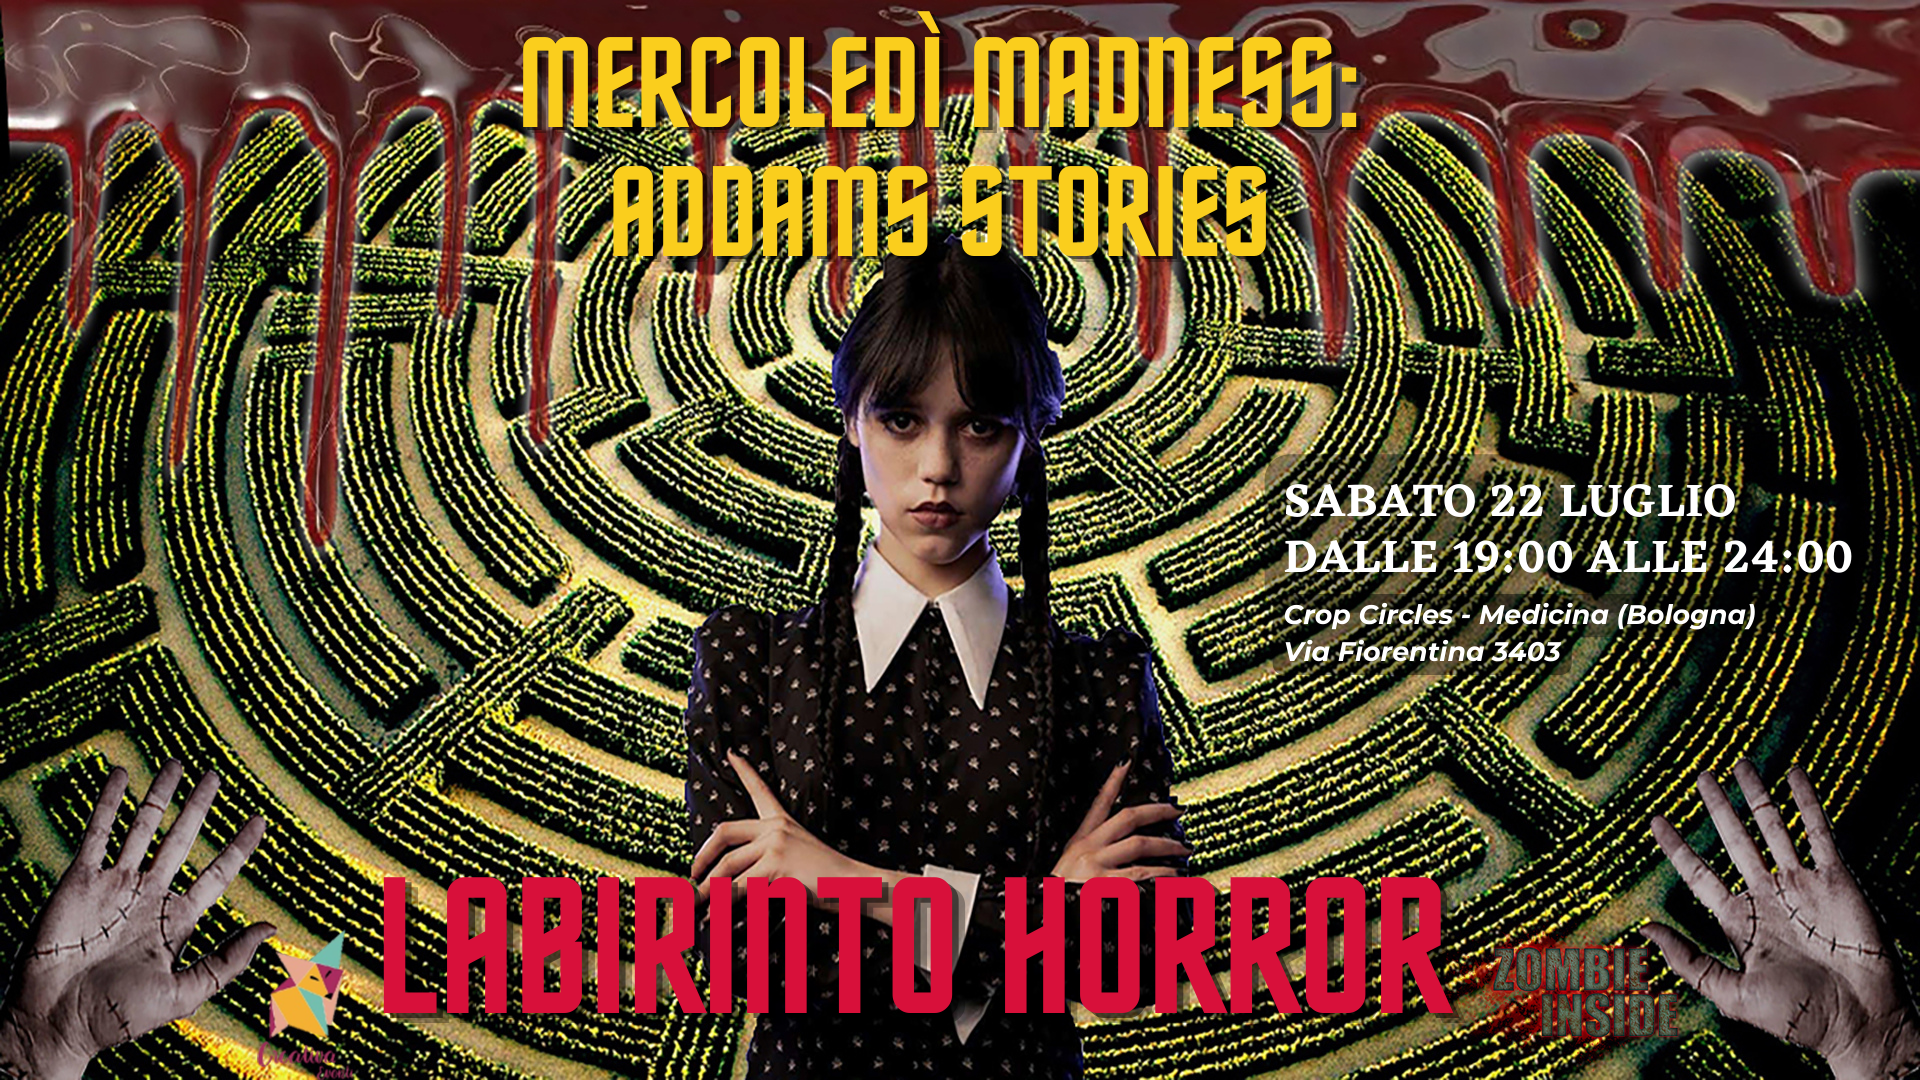 Labirinto Horror Mercoledi Maddness Addams Stories 2023